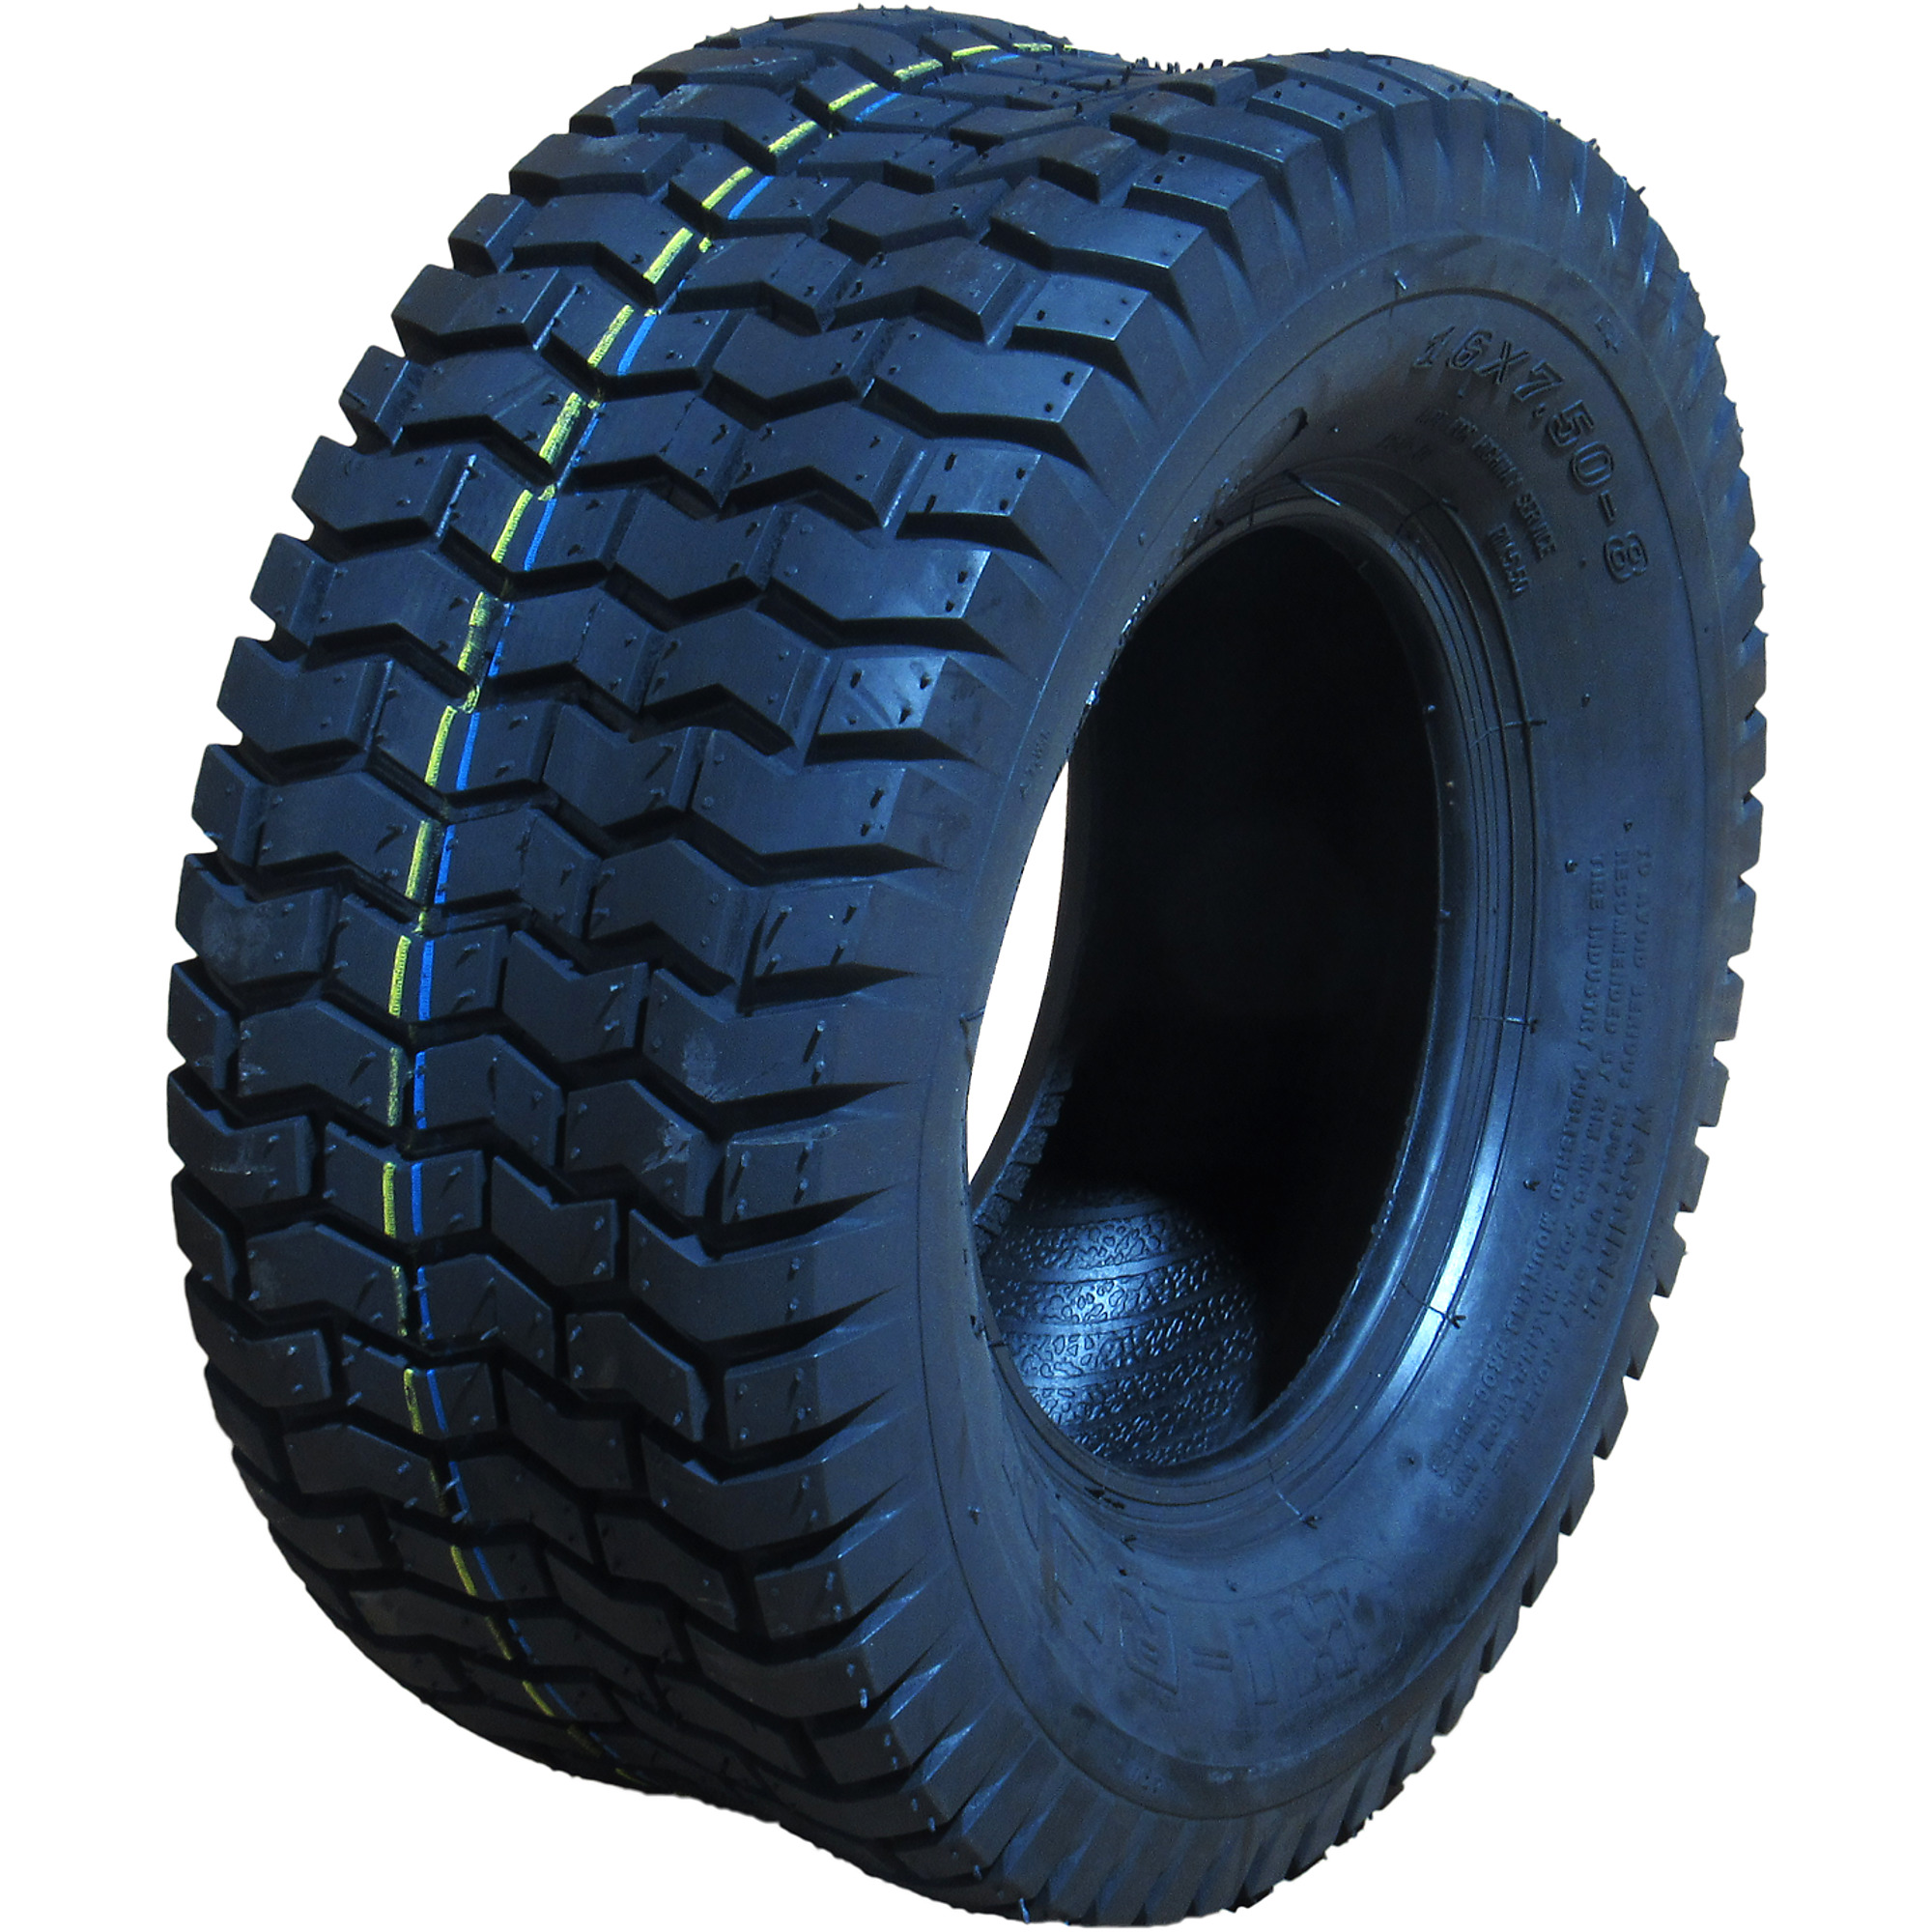 HI-RUN, Lawn Garden Tire, SU12 Turf II, Tire Size 16X7.50-8 Load Range Rating A, Model WD1155